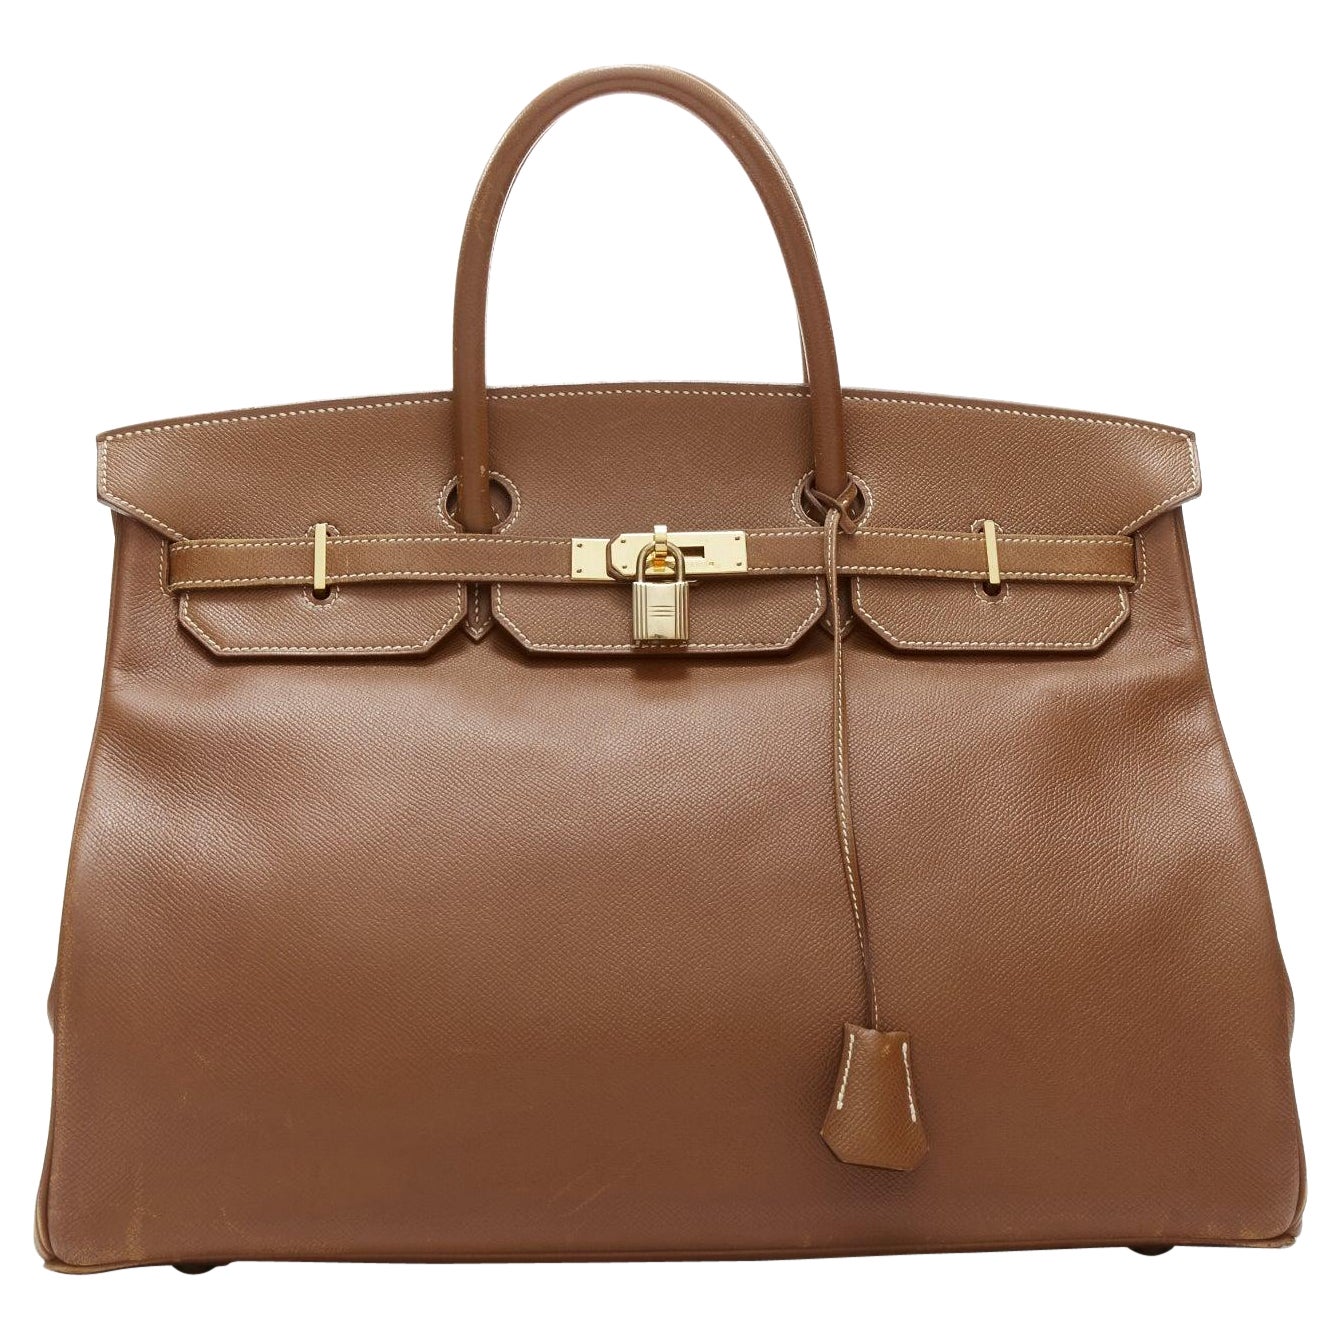 HERMES Birkin 40 Epsom brown leather gold hardware leather tote bag For Sale